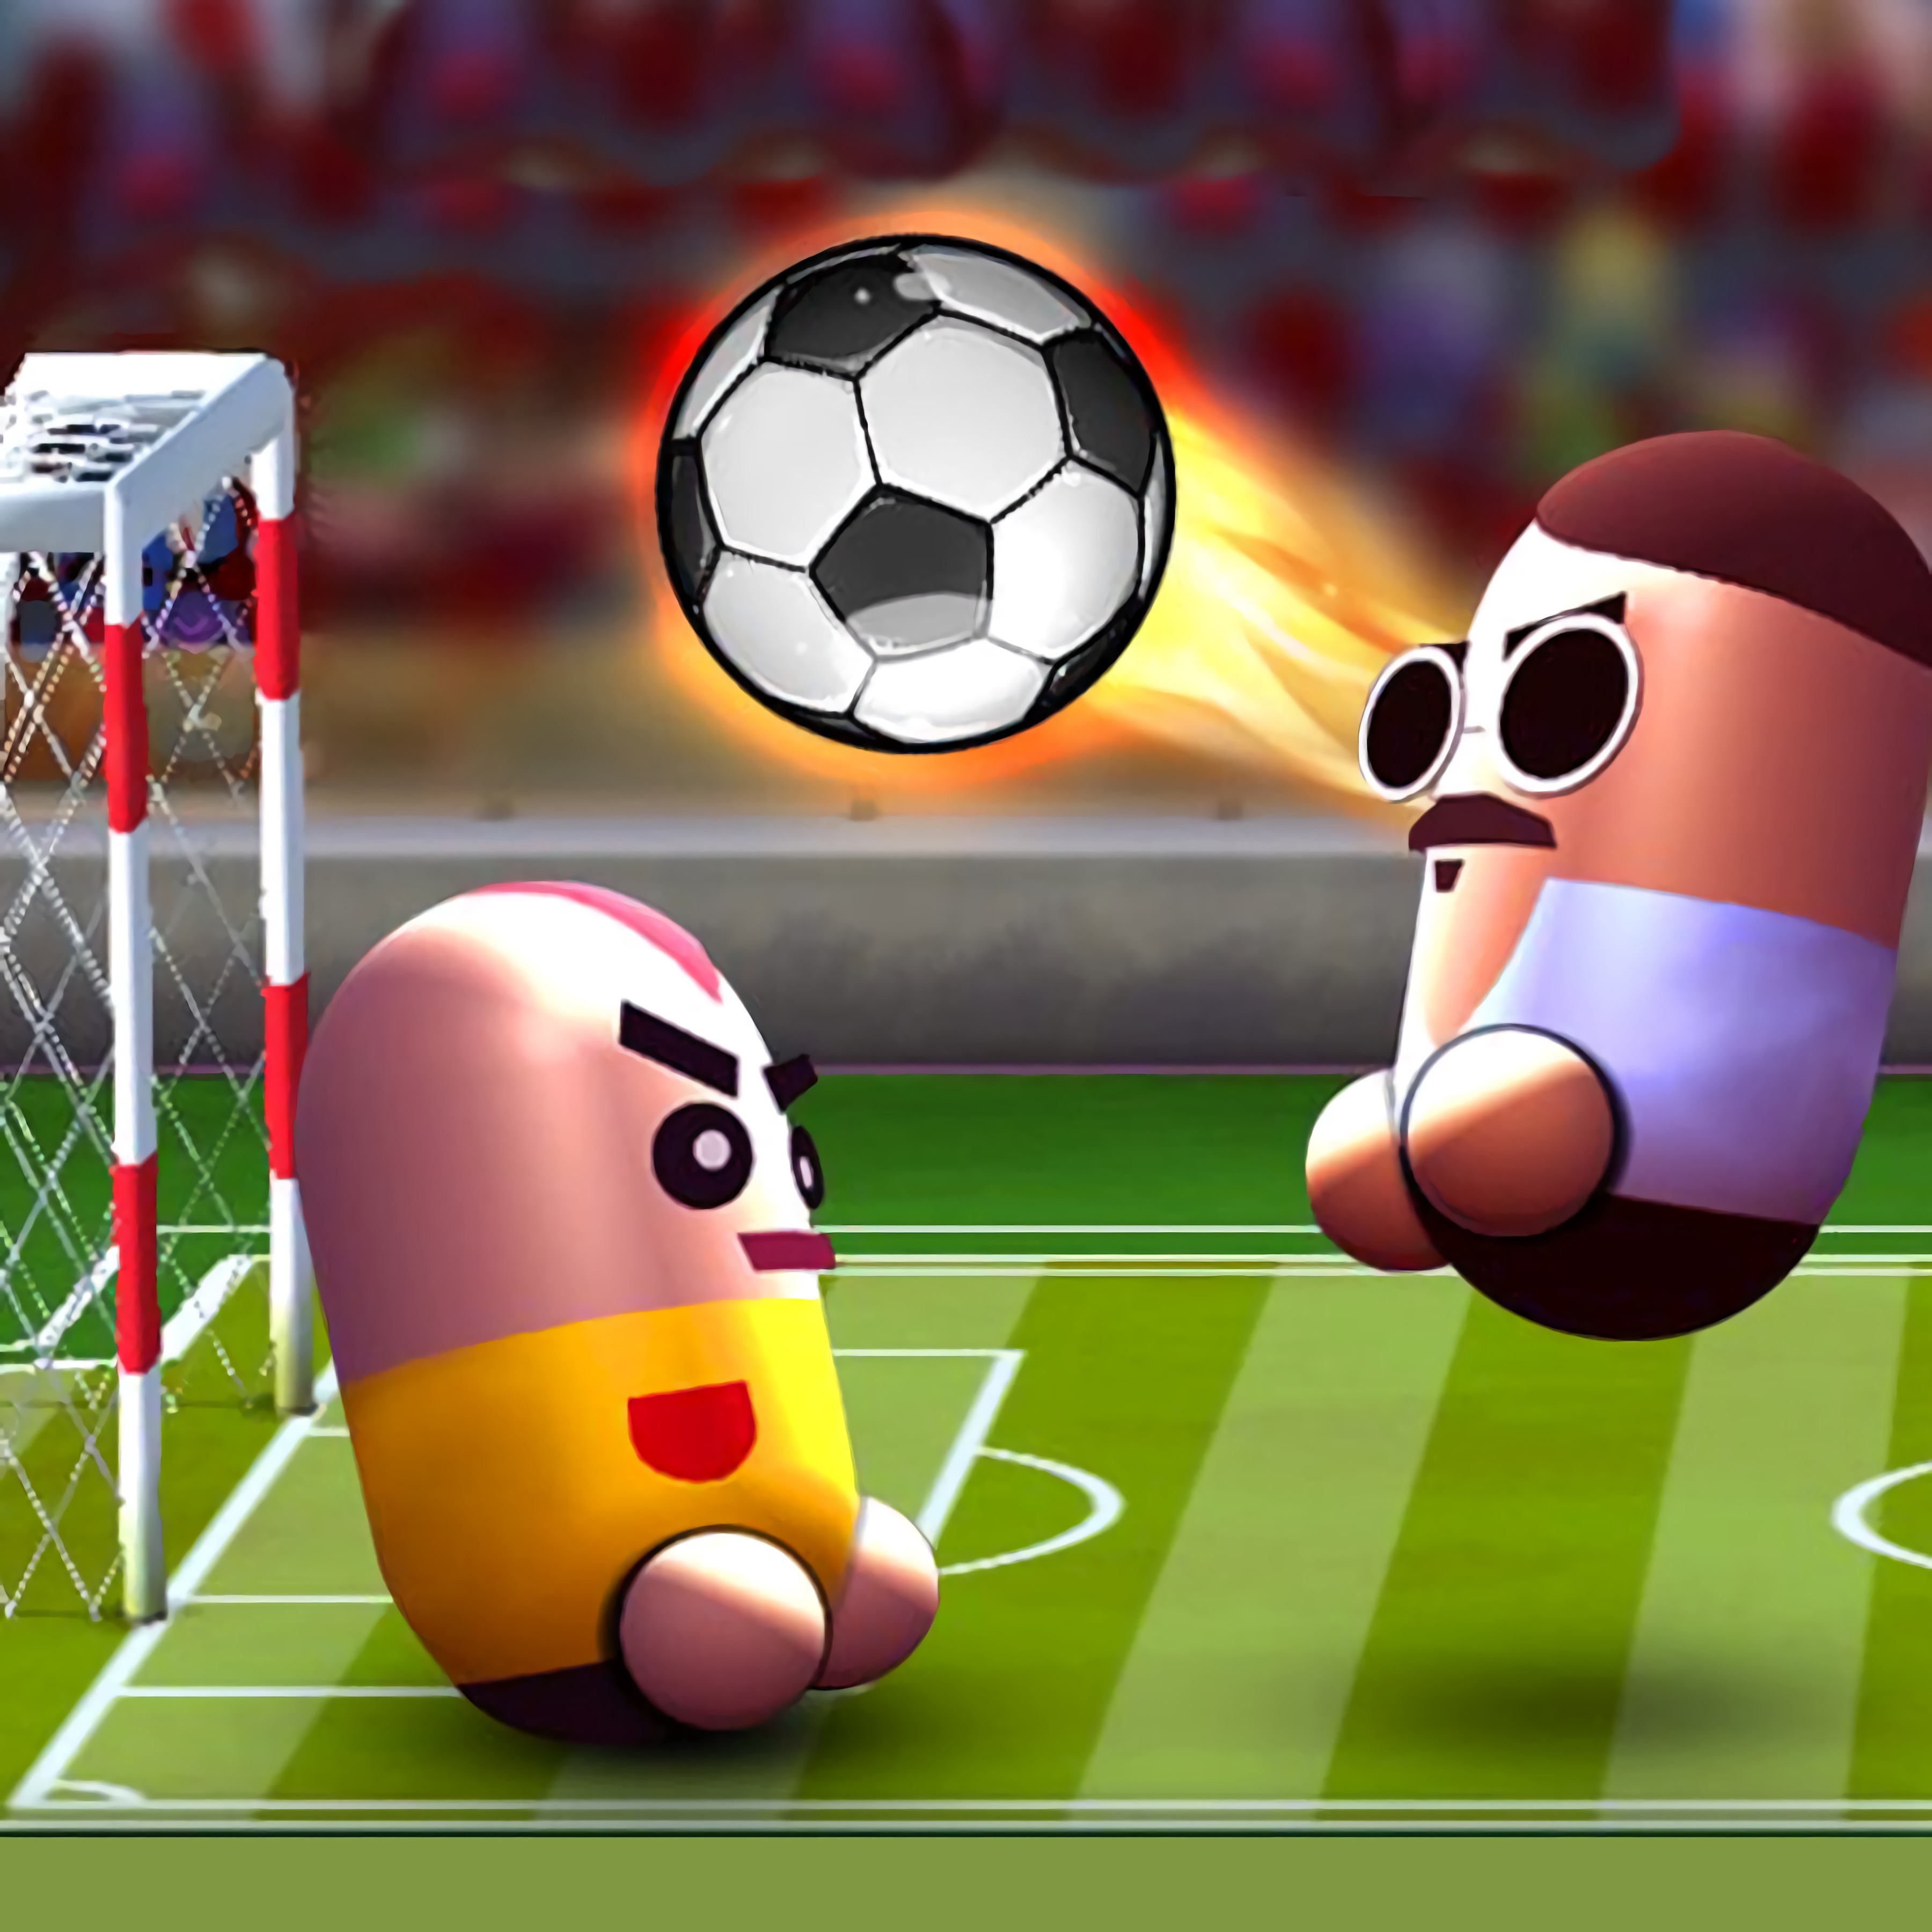 Football Gamess - Play Online at Friv5Online